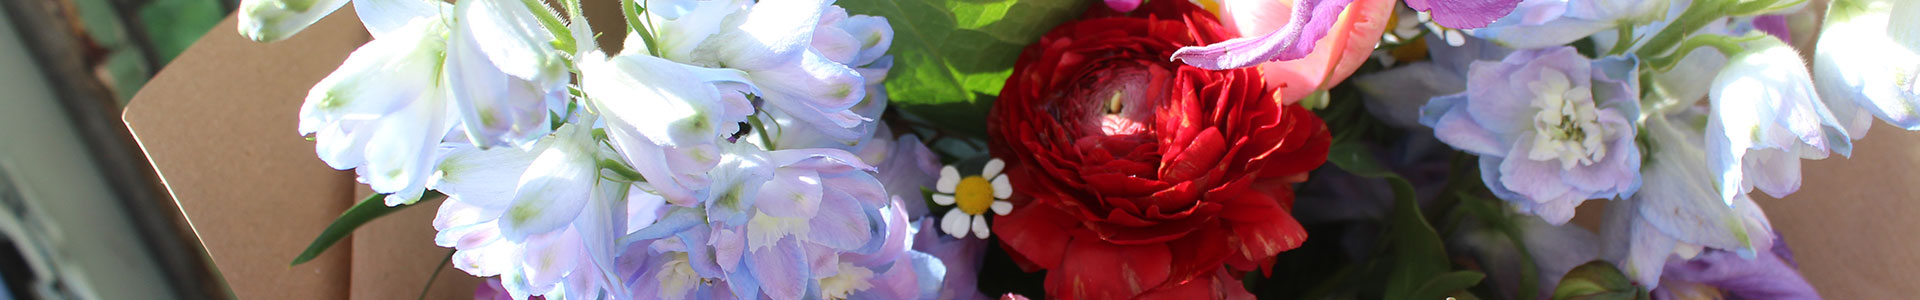 Flowers by The Midnight Garden florist